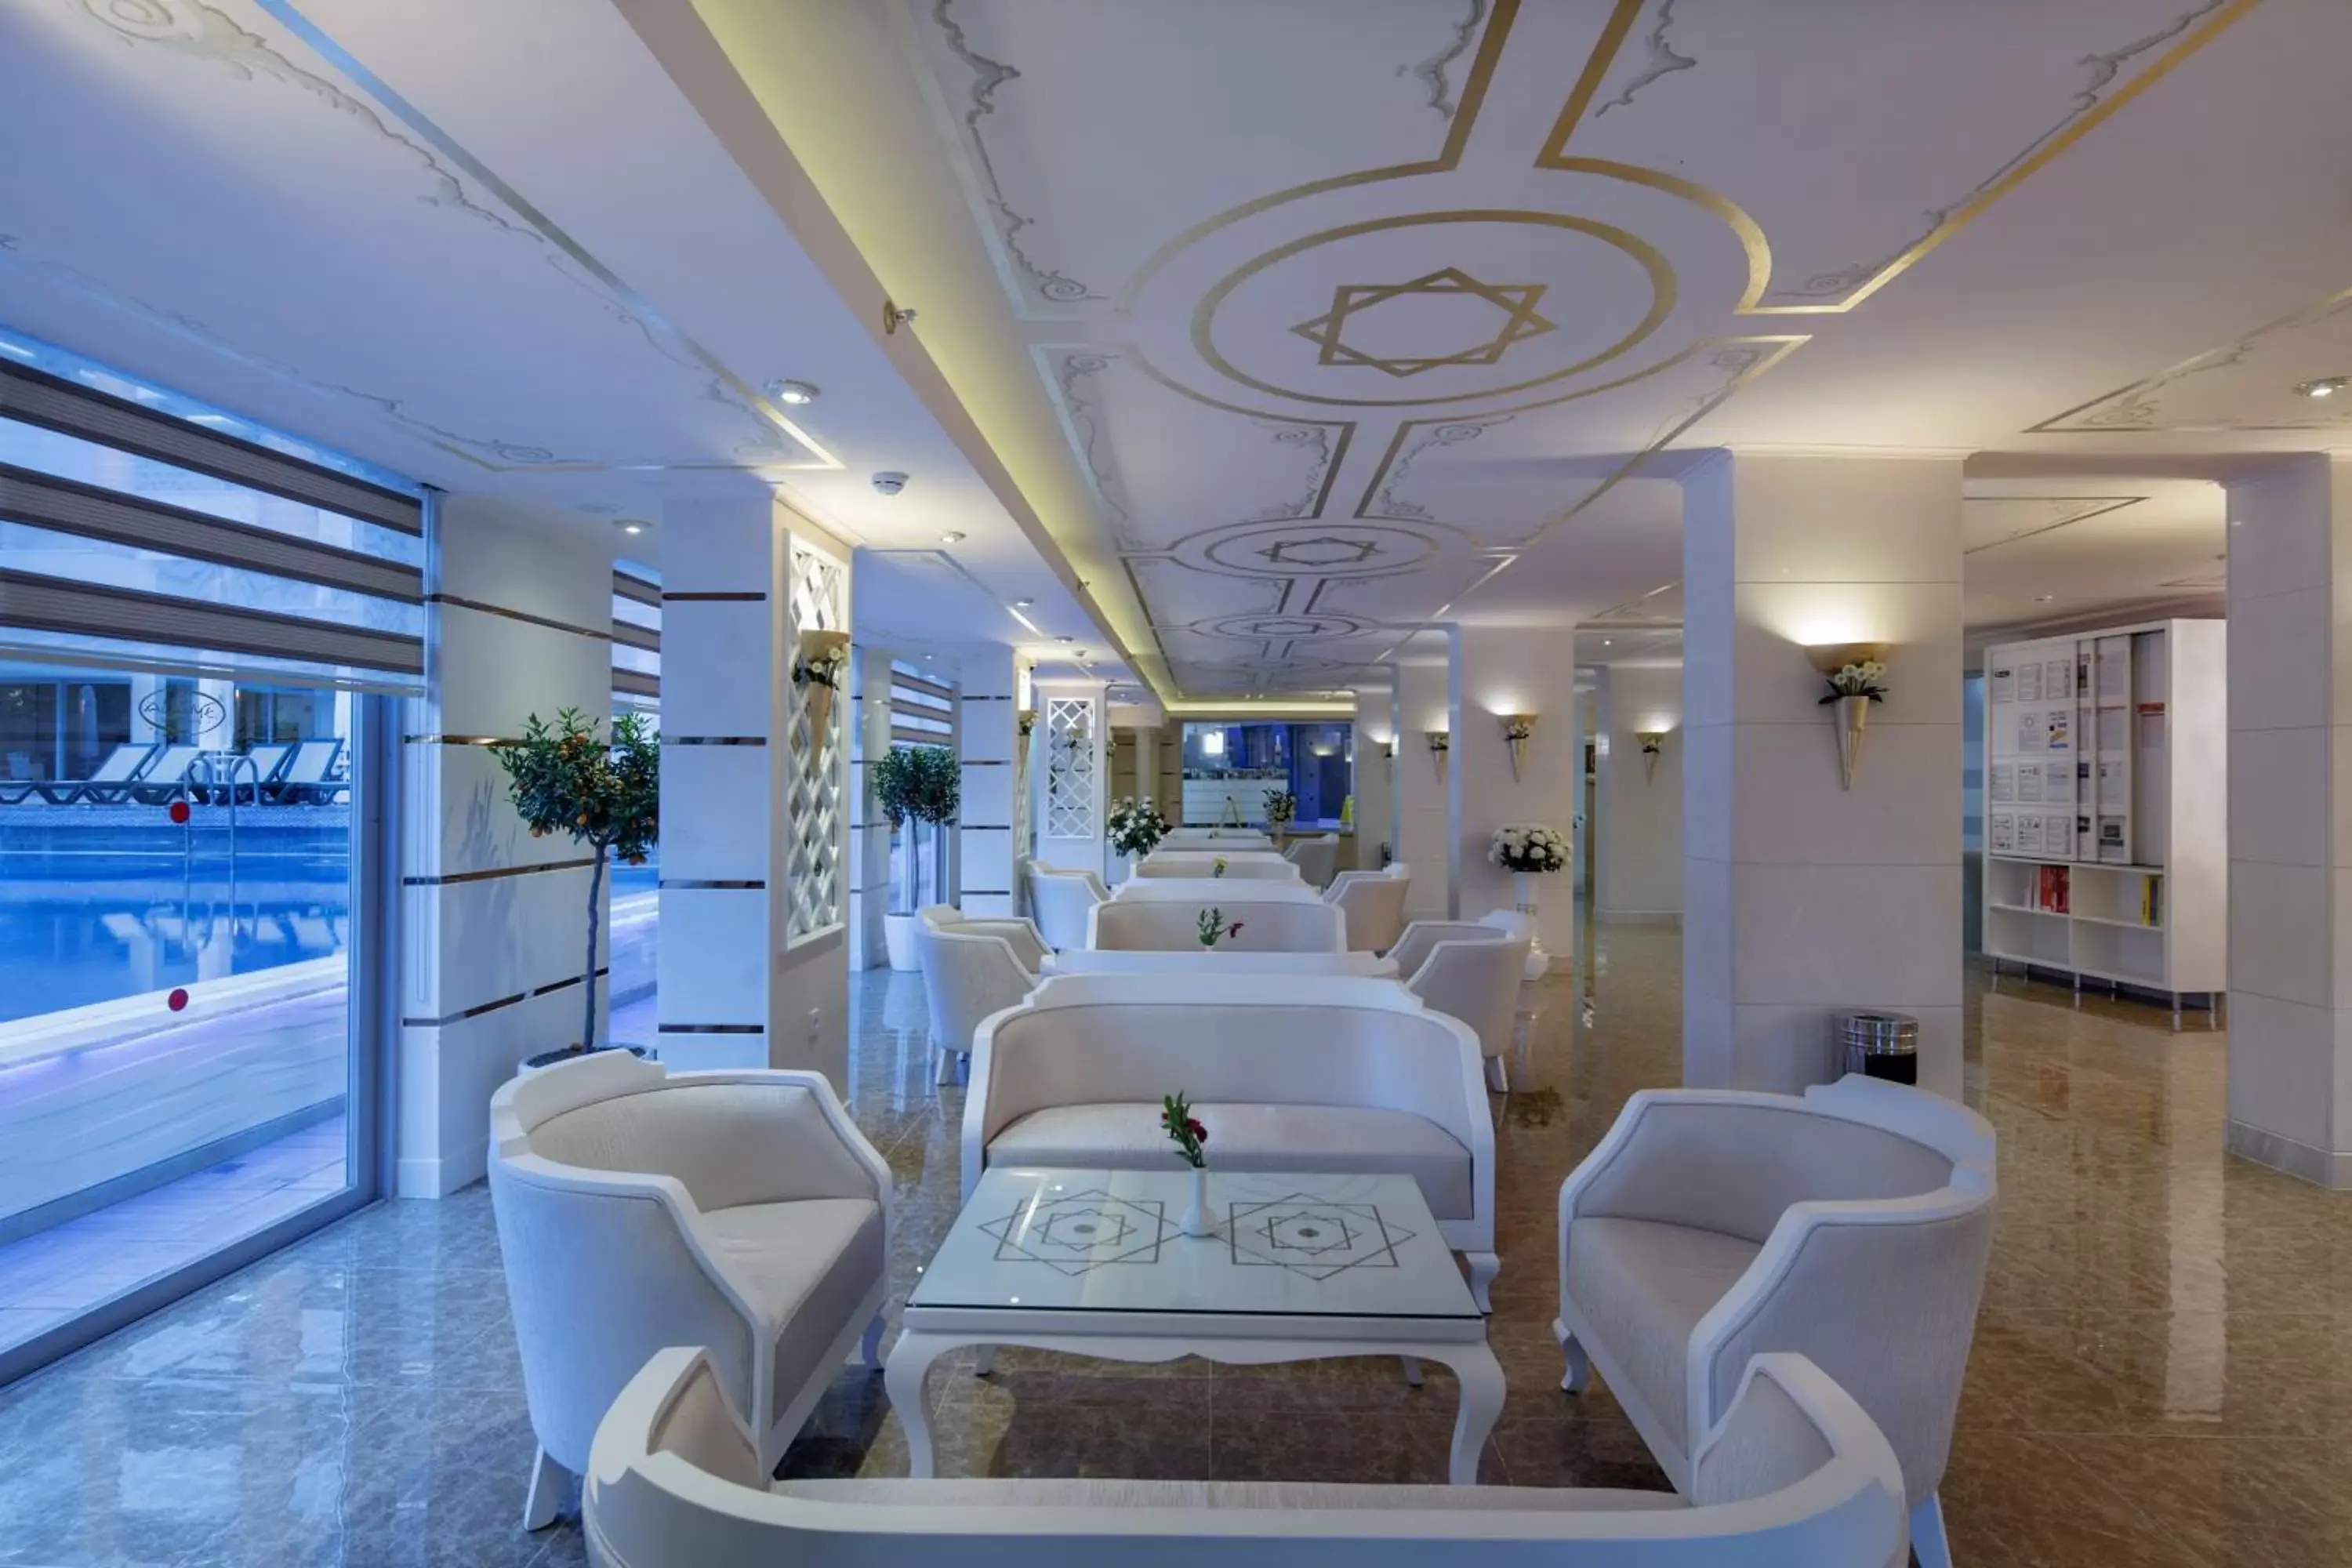 Lobby or reception in Alaiye Kleopatra Hotel